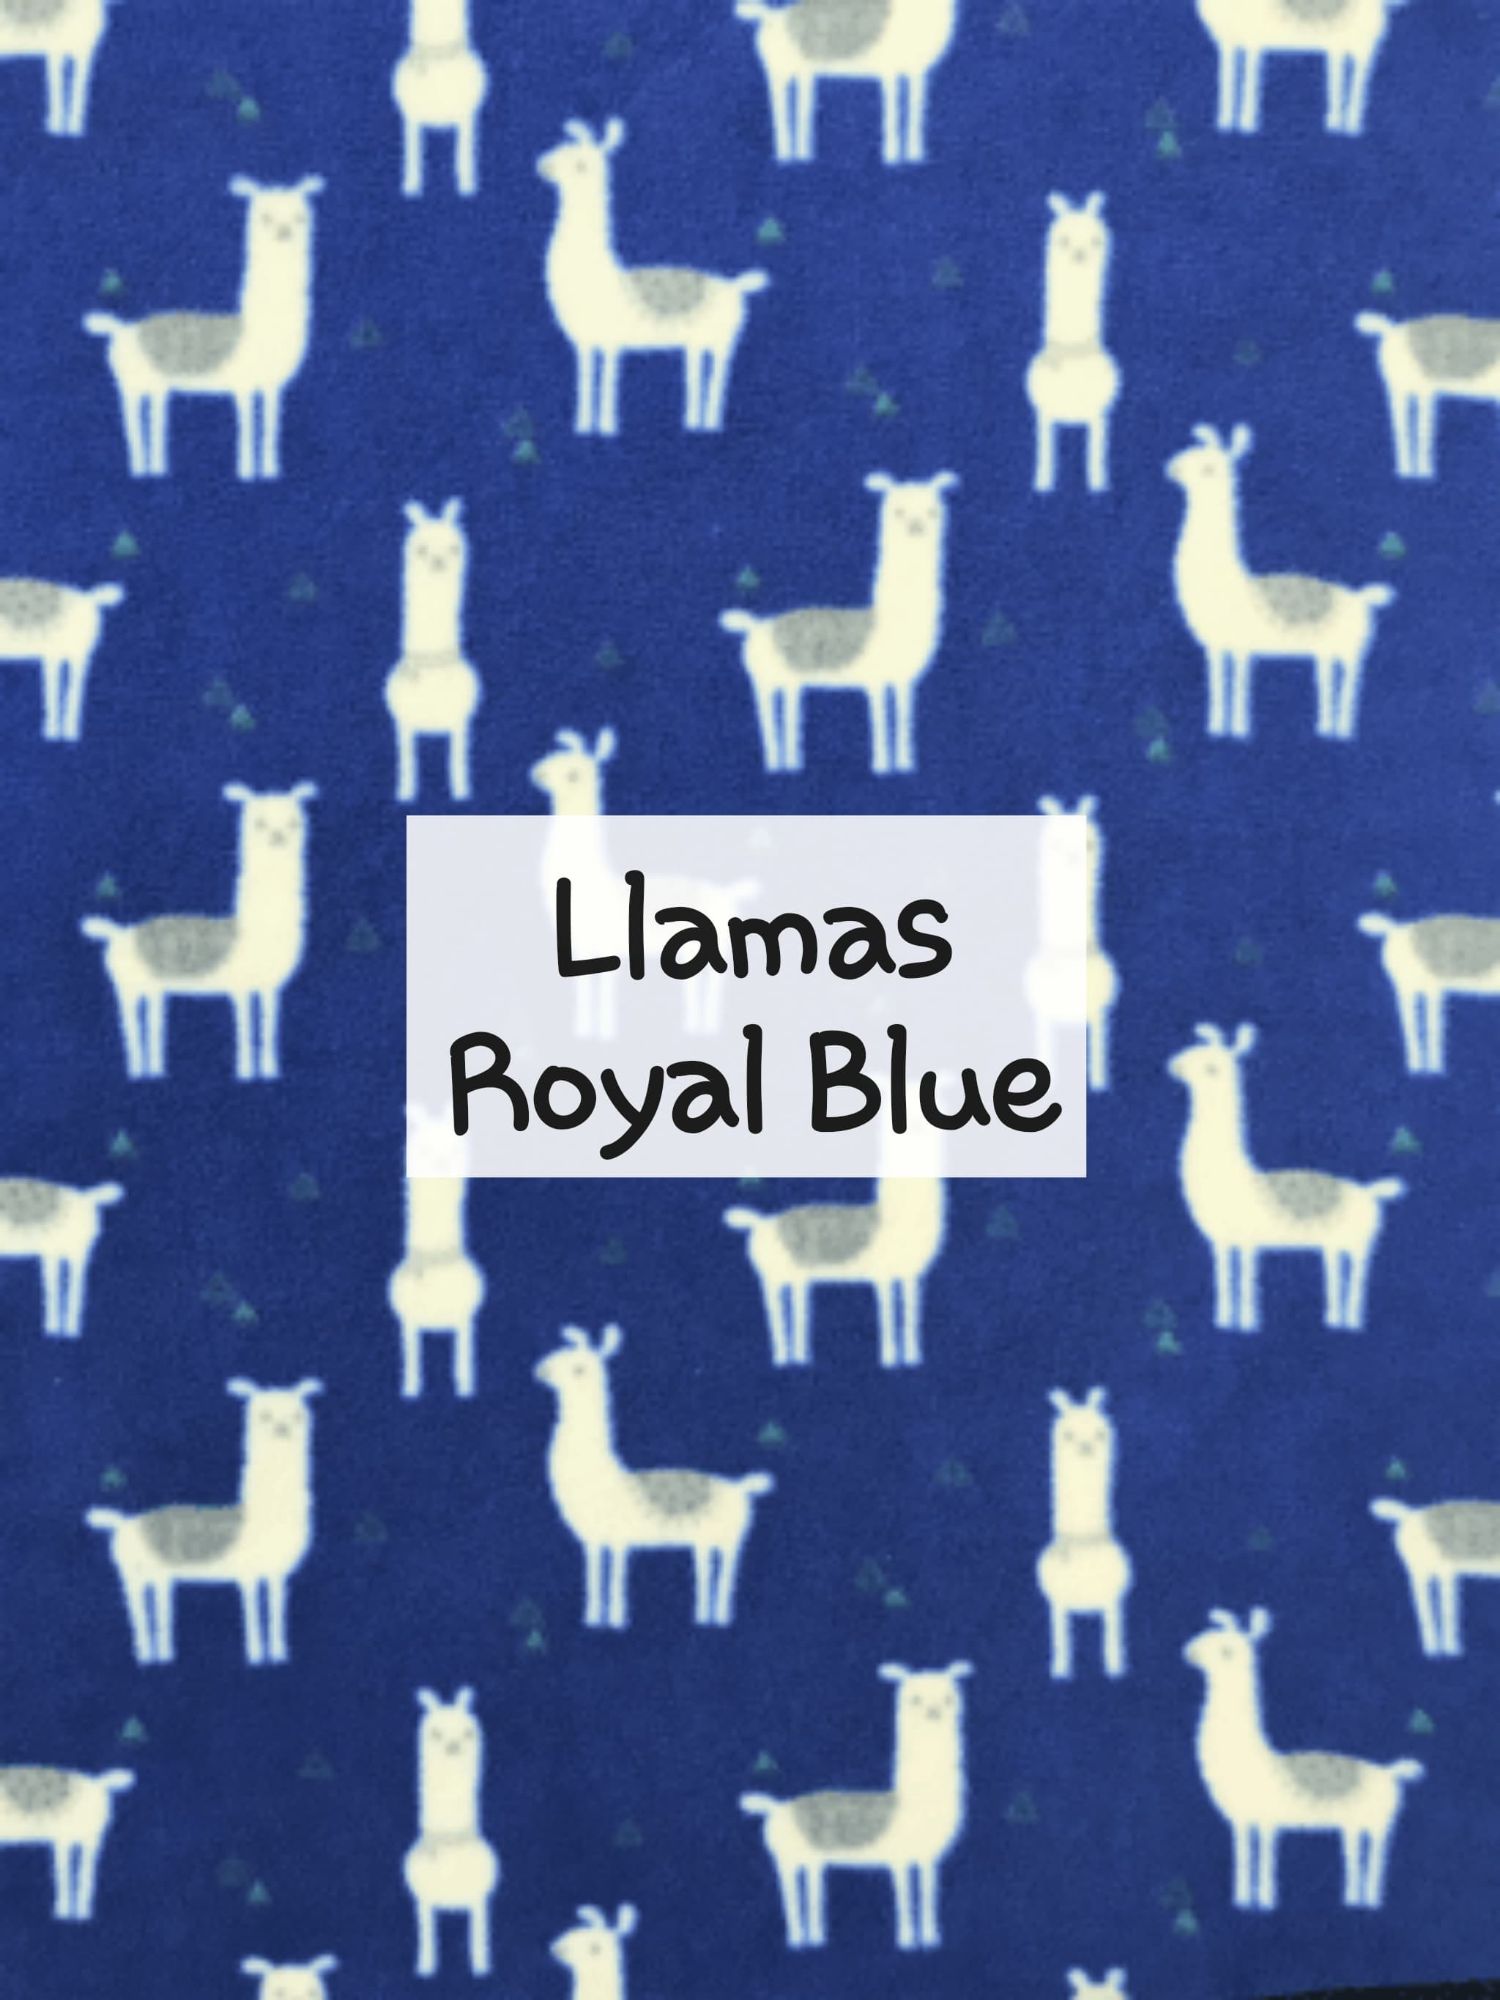 llamas royal blue fleece